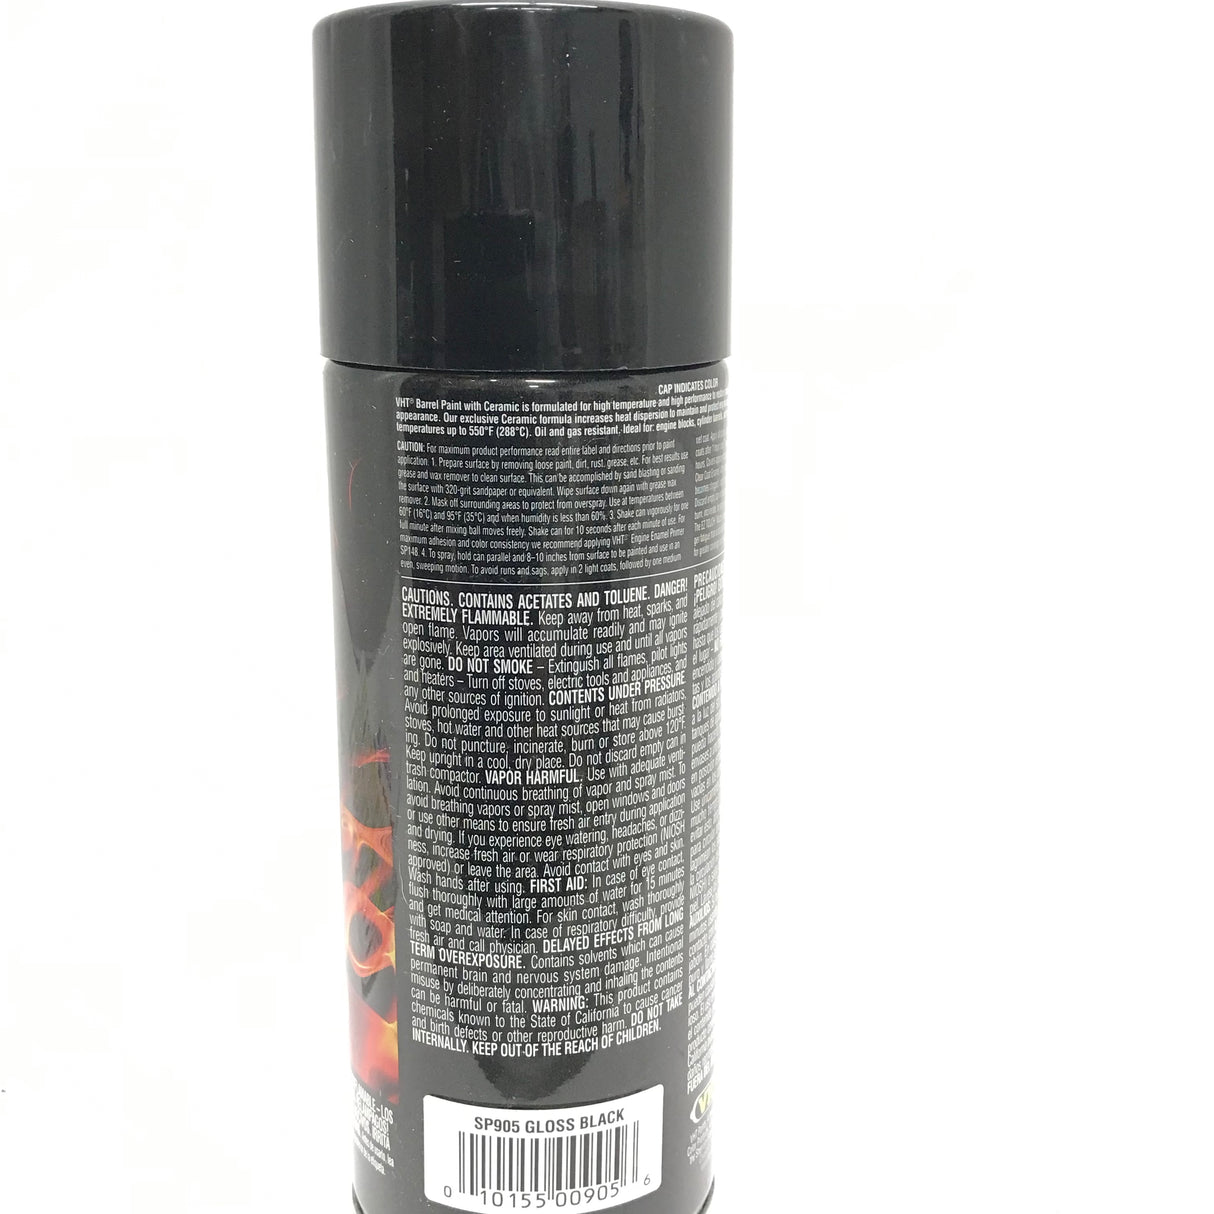 VHT SP905-3 PACK GLOSS BLACK High Temperature Barrel Paint with Ceramic - 11 oz